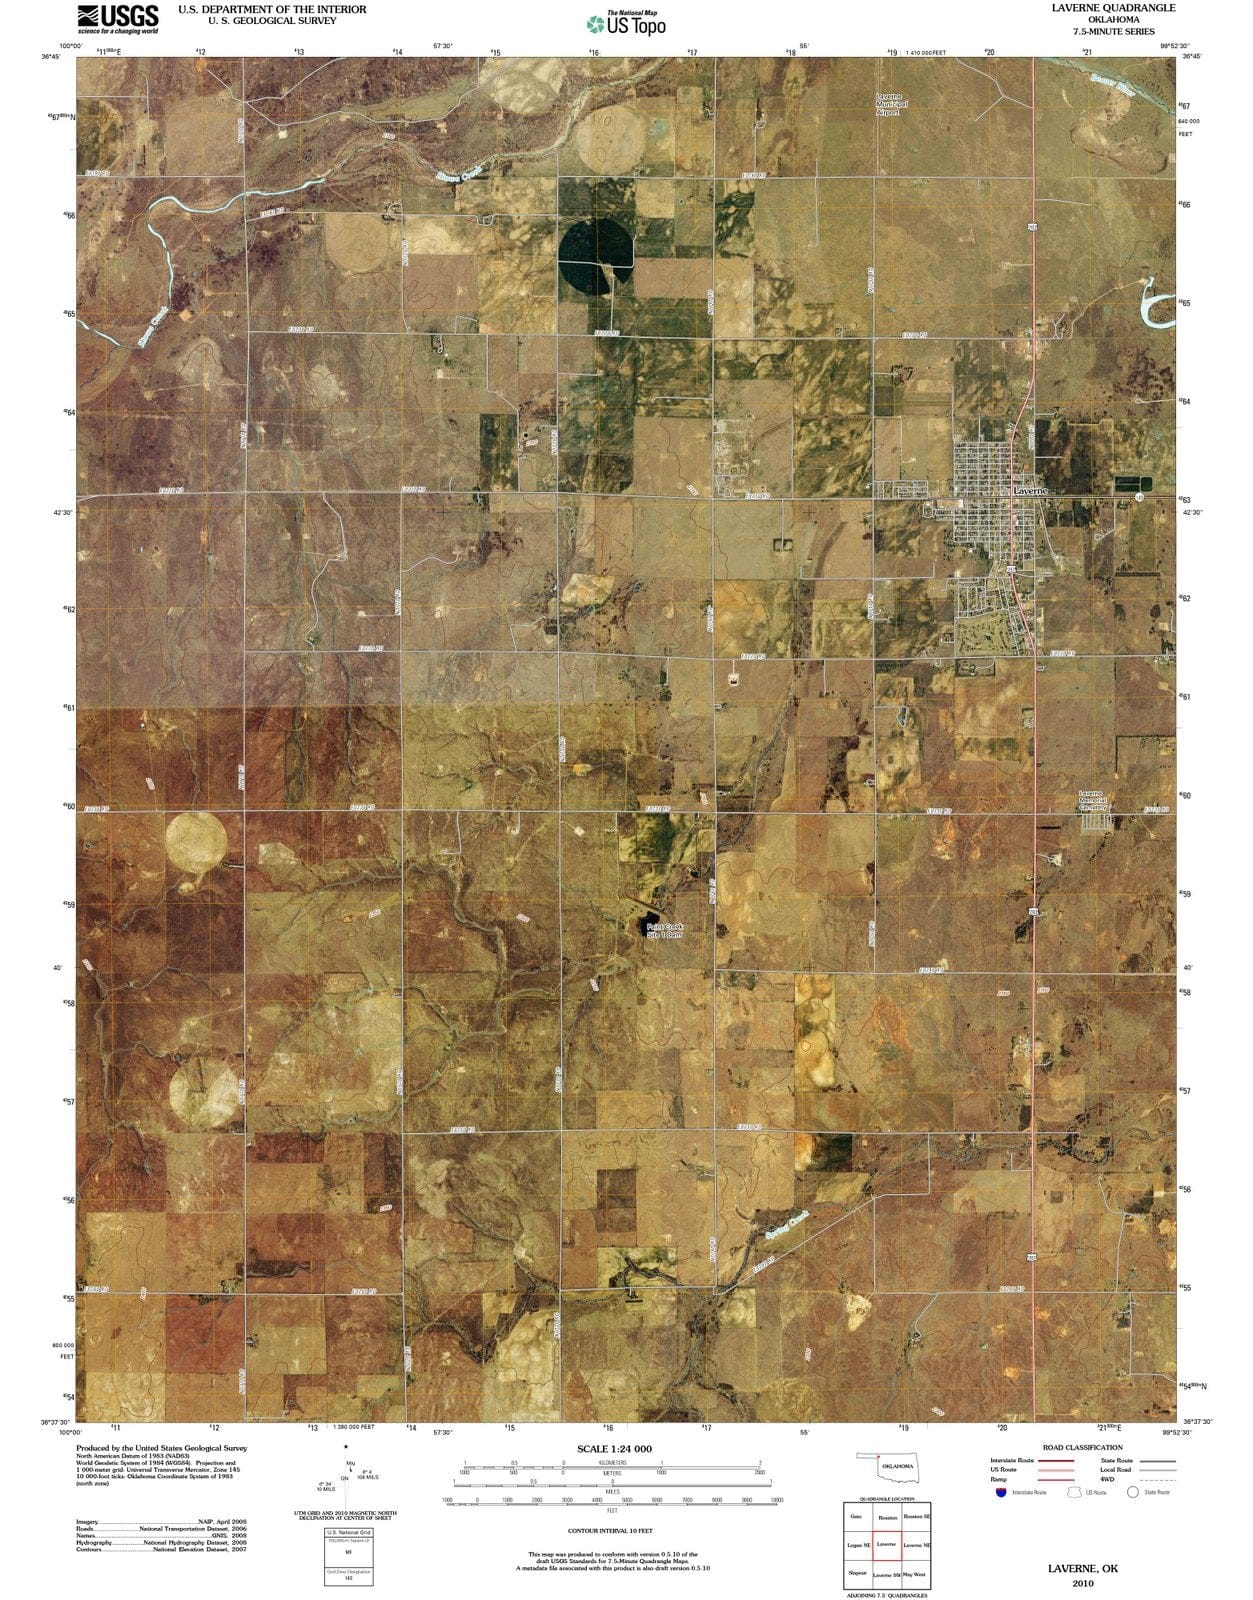 2010 Laverne, OK - Oklahoma - USGS Topographic Map